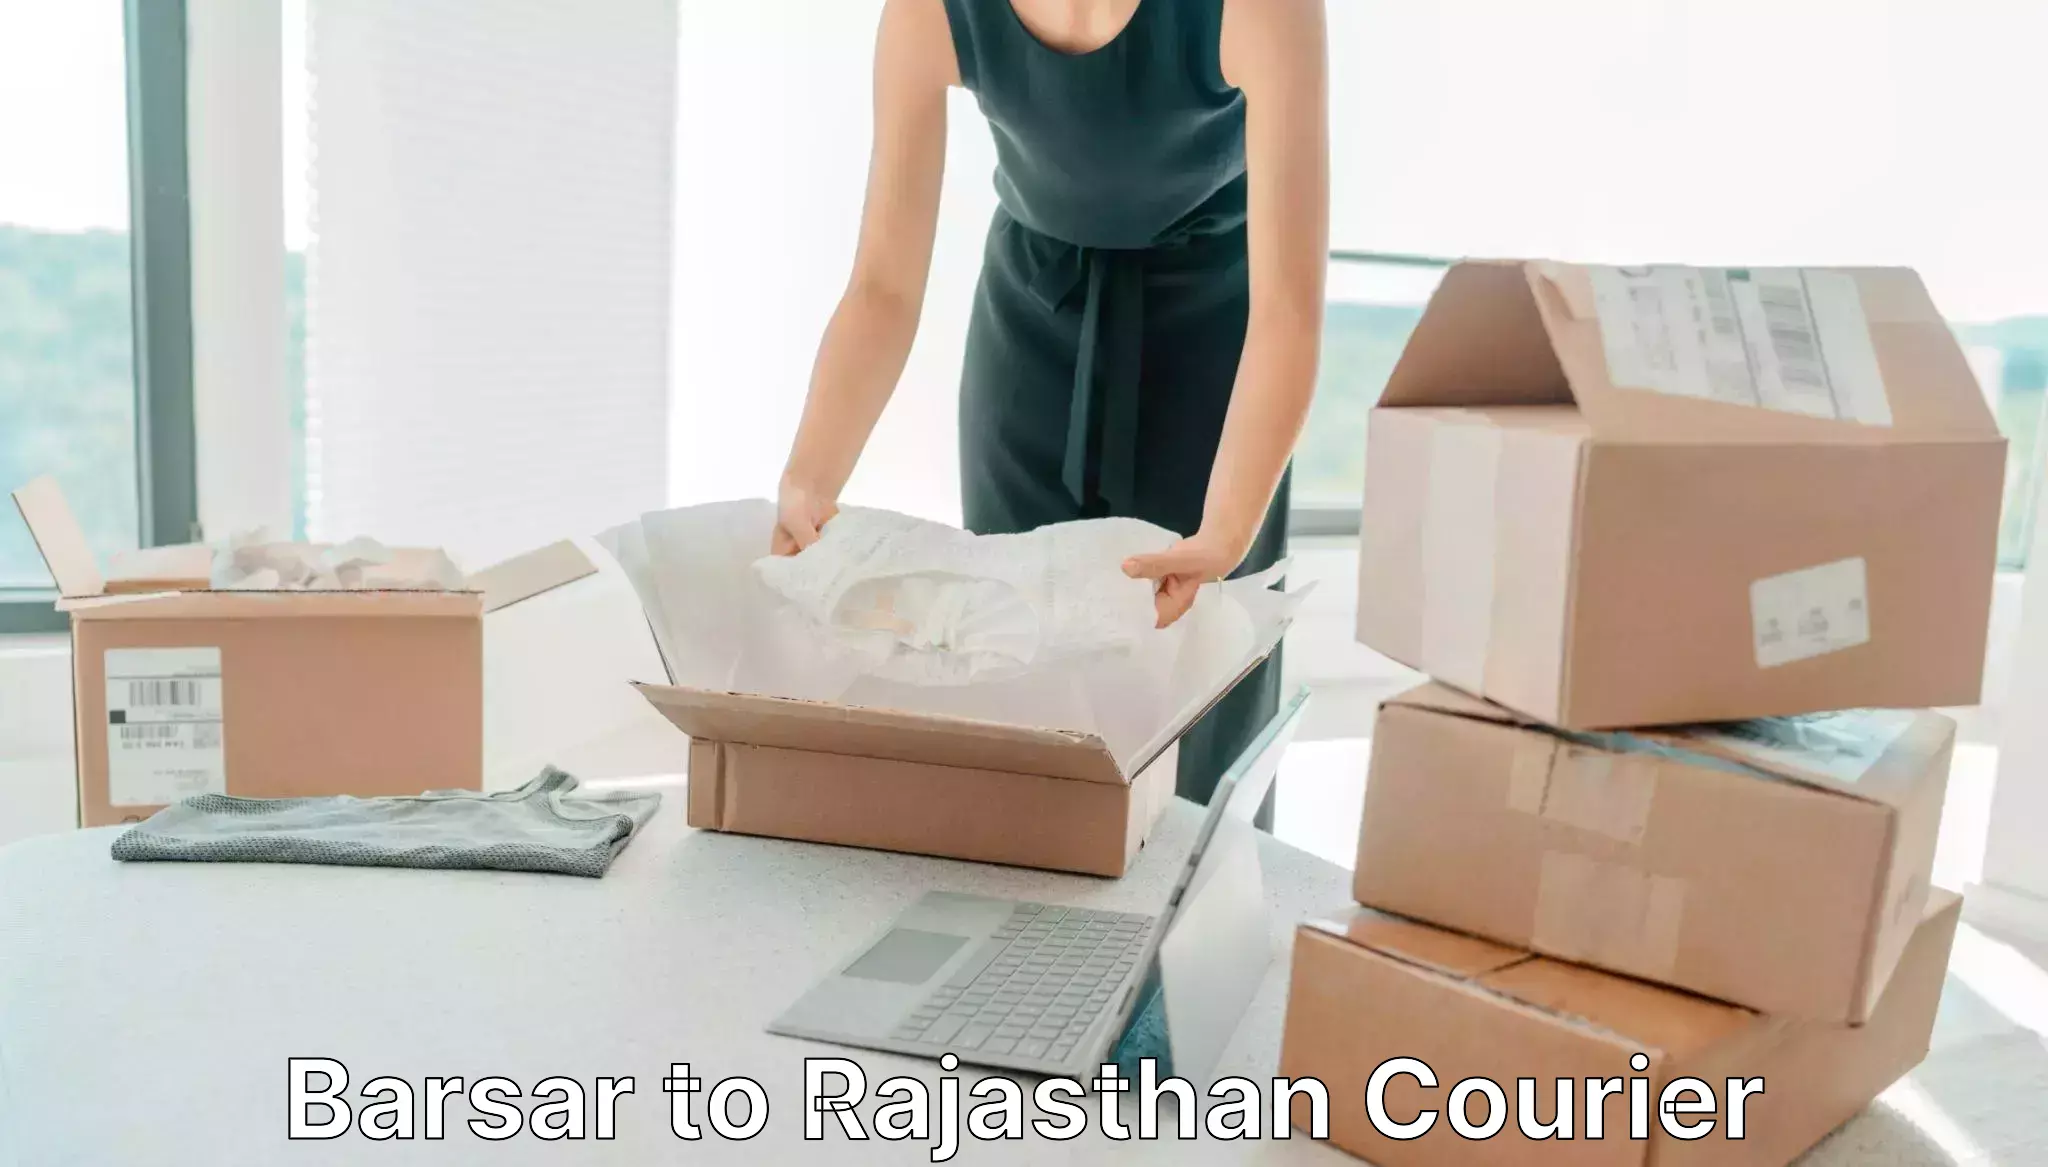 Cash on delivery service Barsar to Sultana